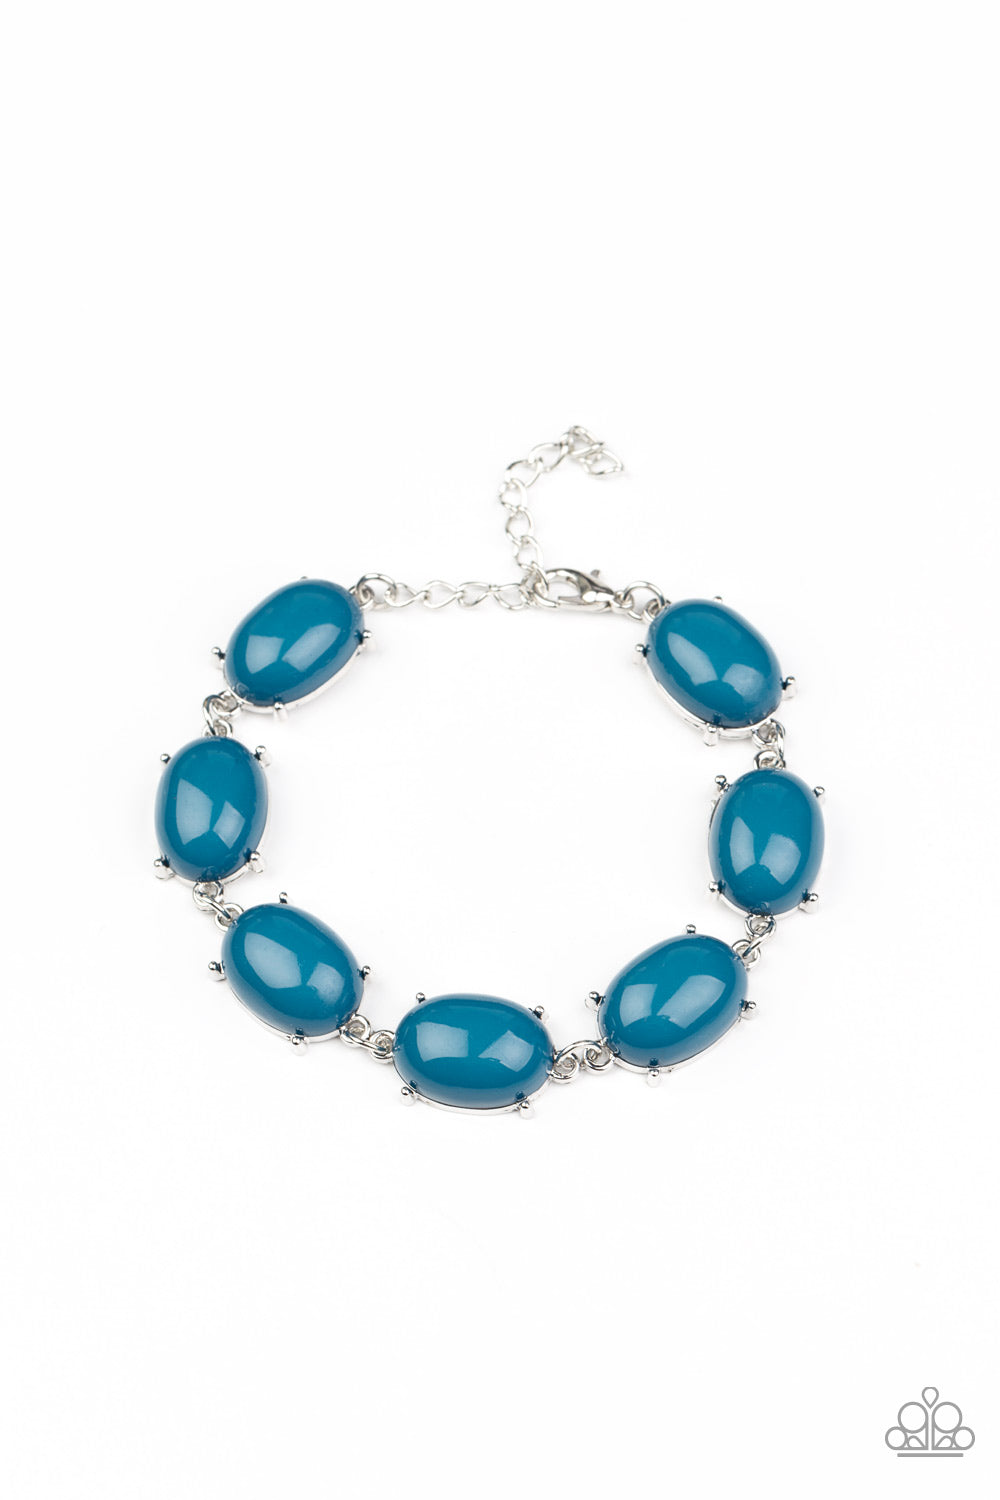 Confidently Colorful - Blue Bracelet